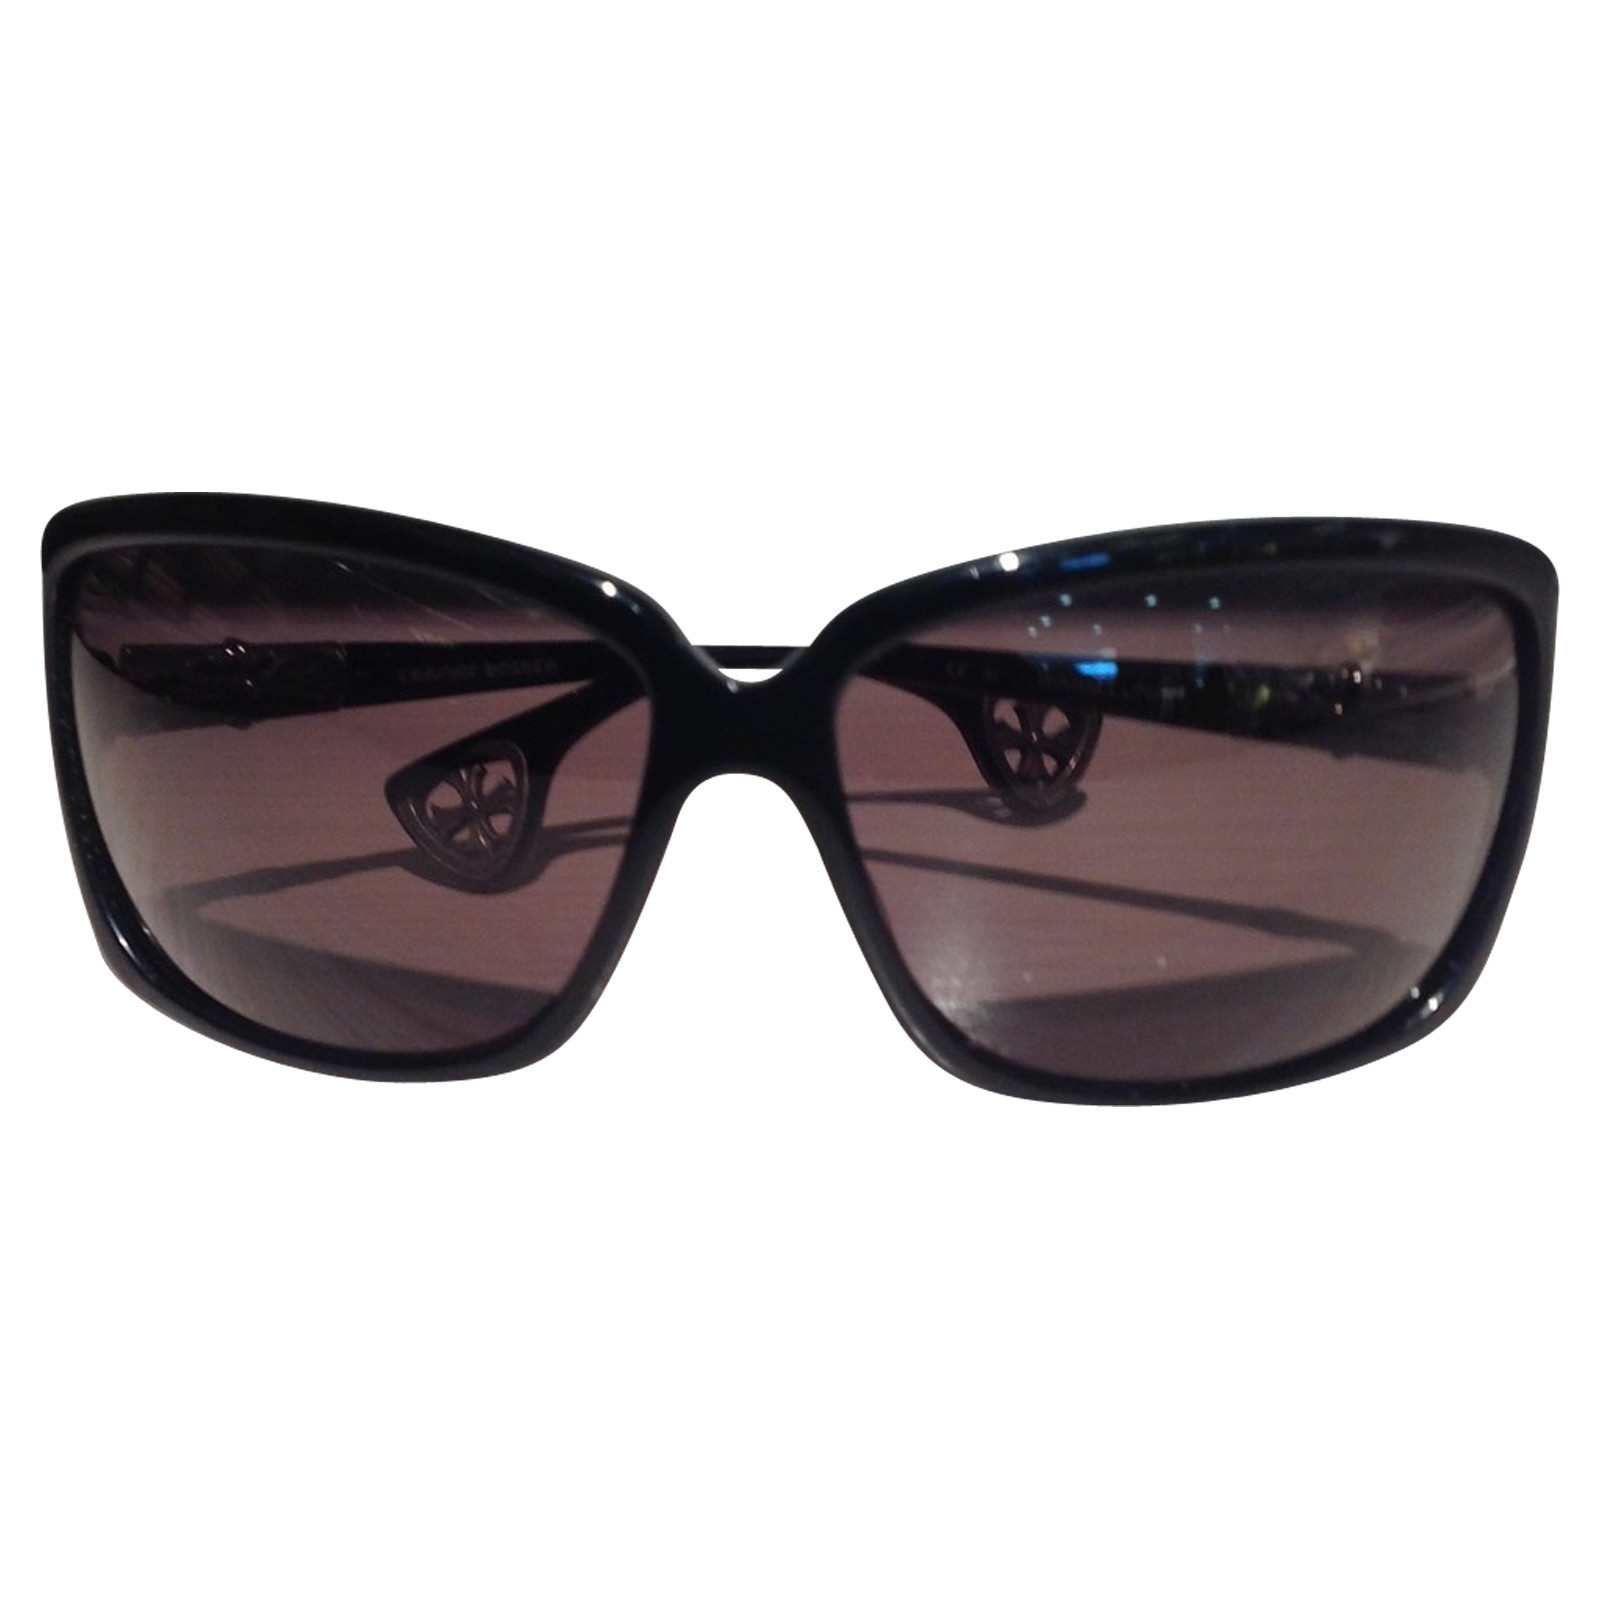 Chrome Hearts Sunglasses In Black Second Hand Chrome Hearts Sunglasses In Black Buy Used For 250